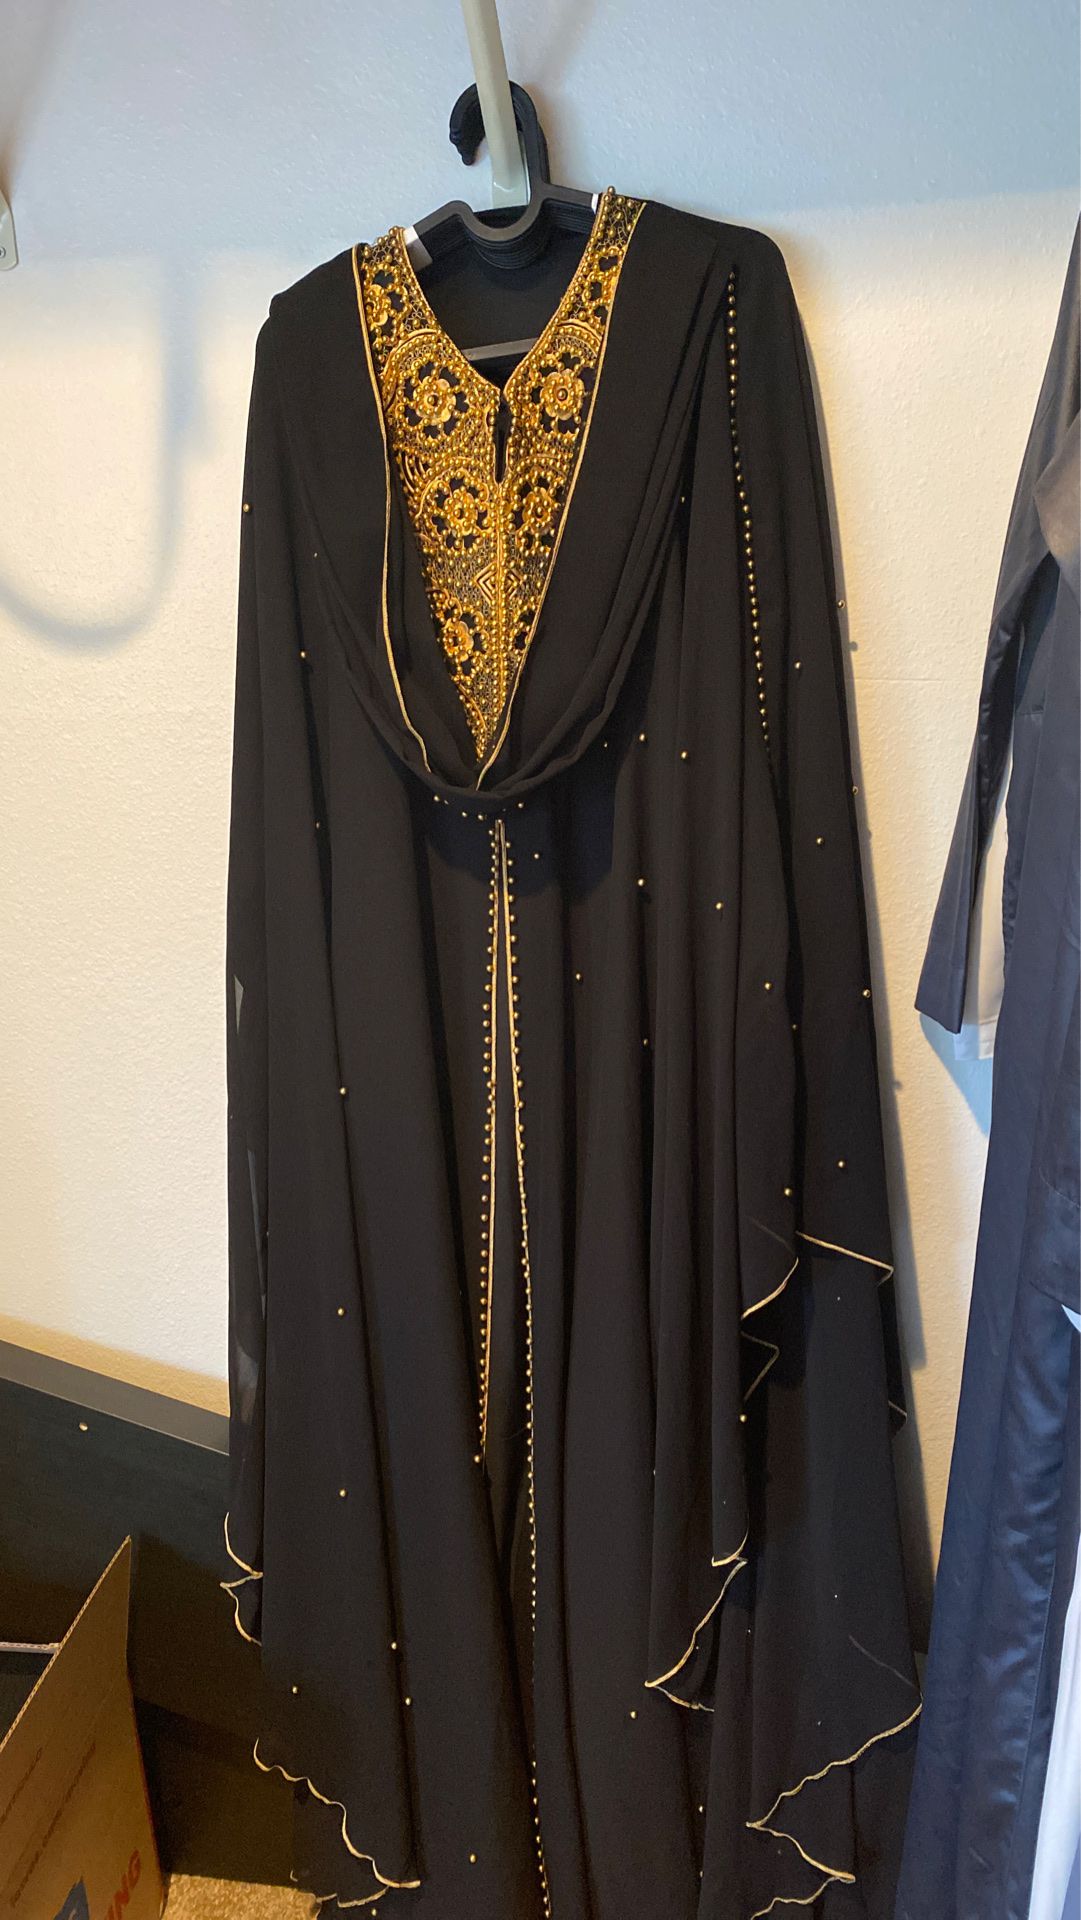 Morden Arabian dress(Abaya), good condition, worn one time event.